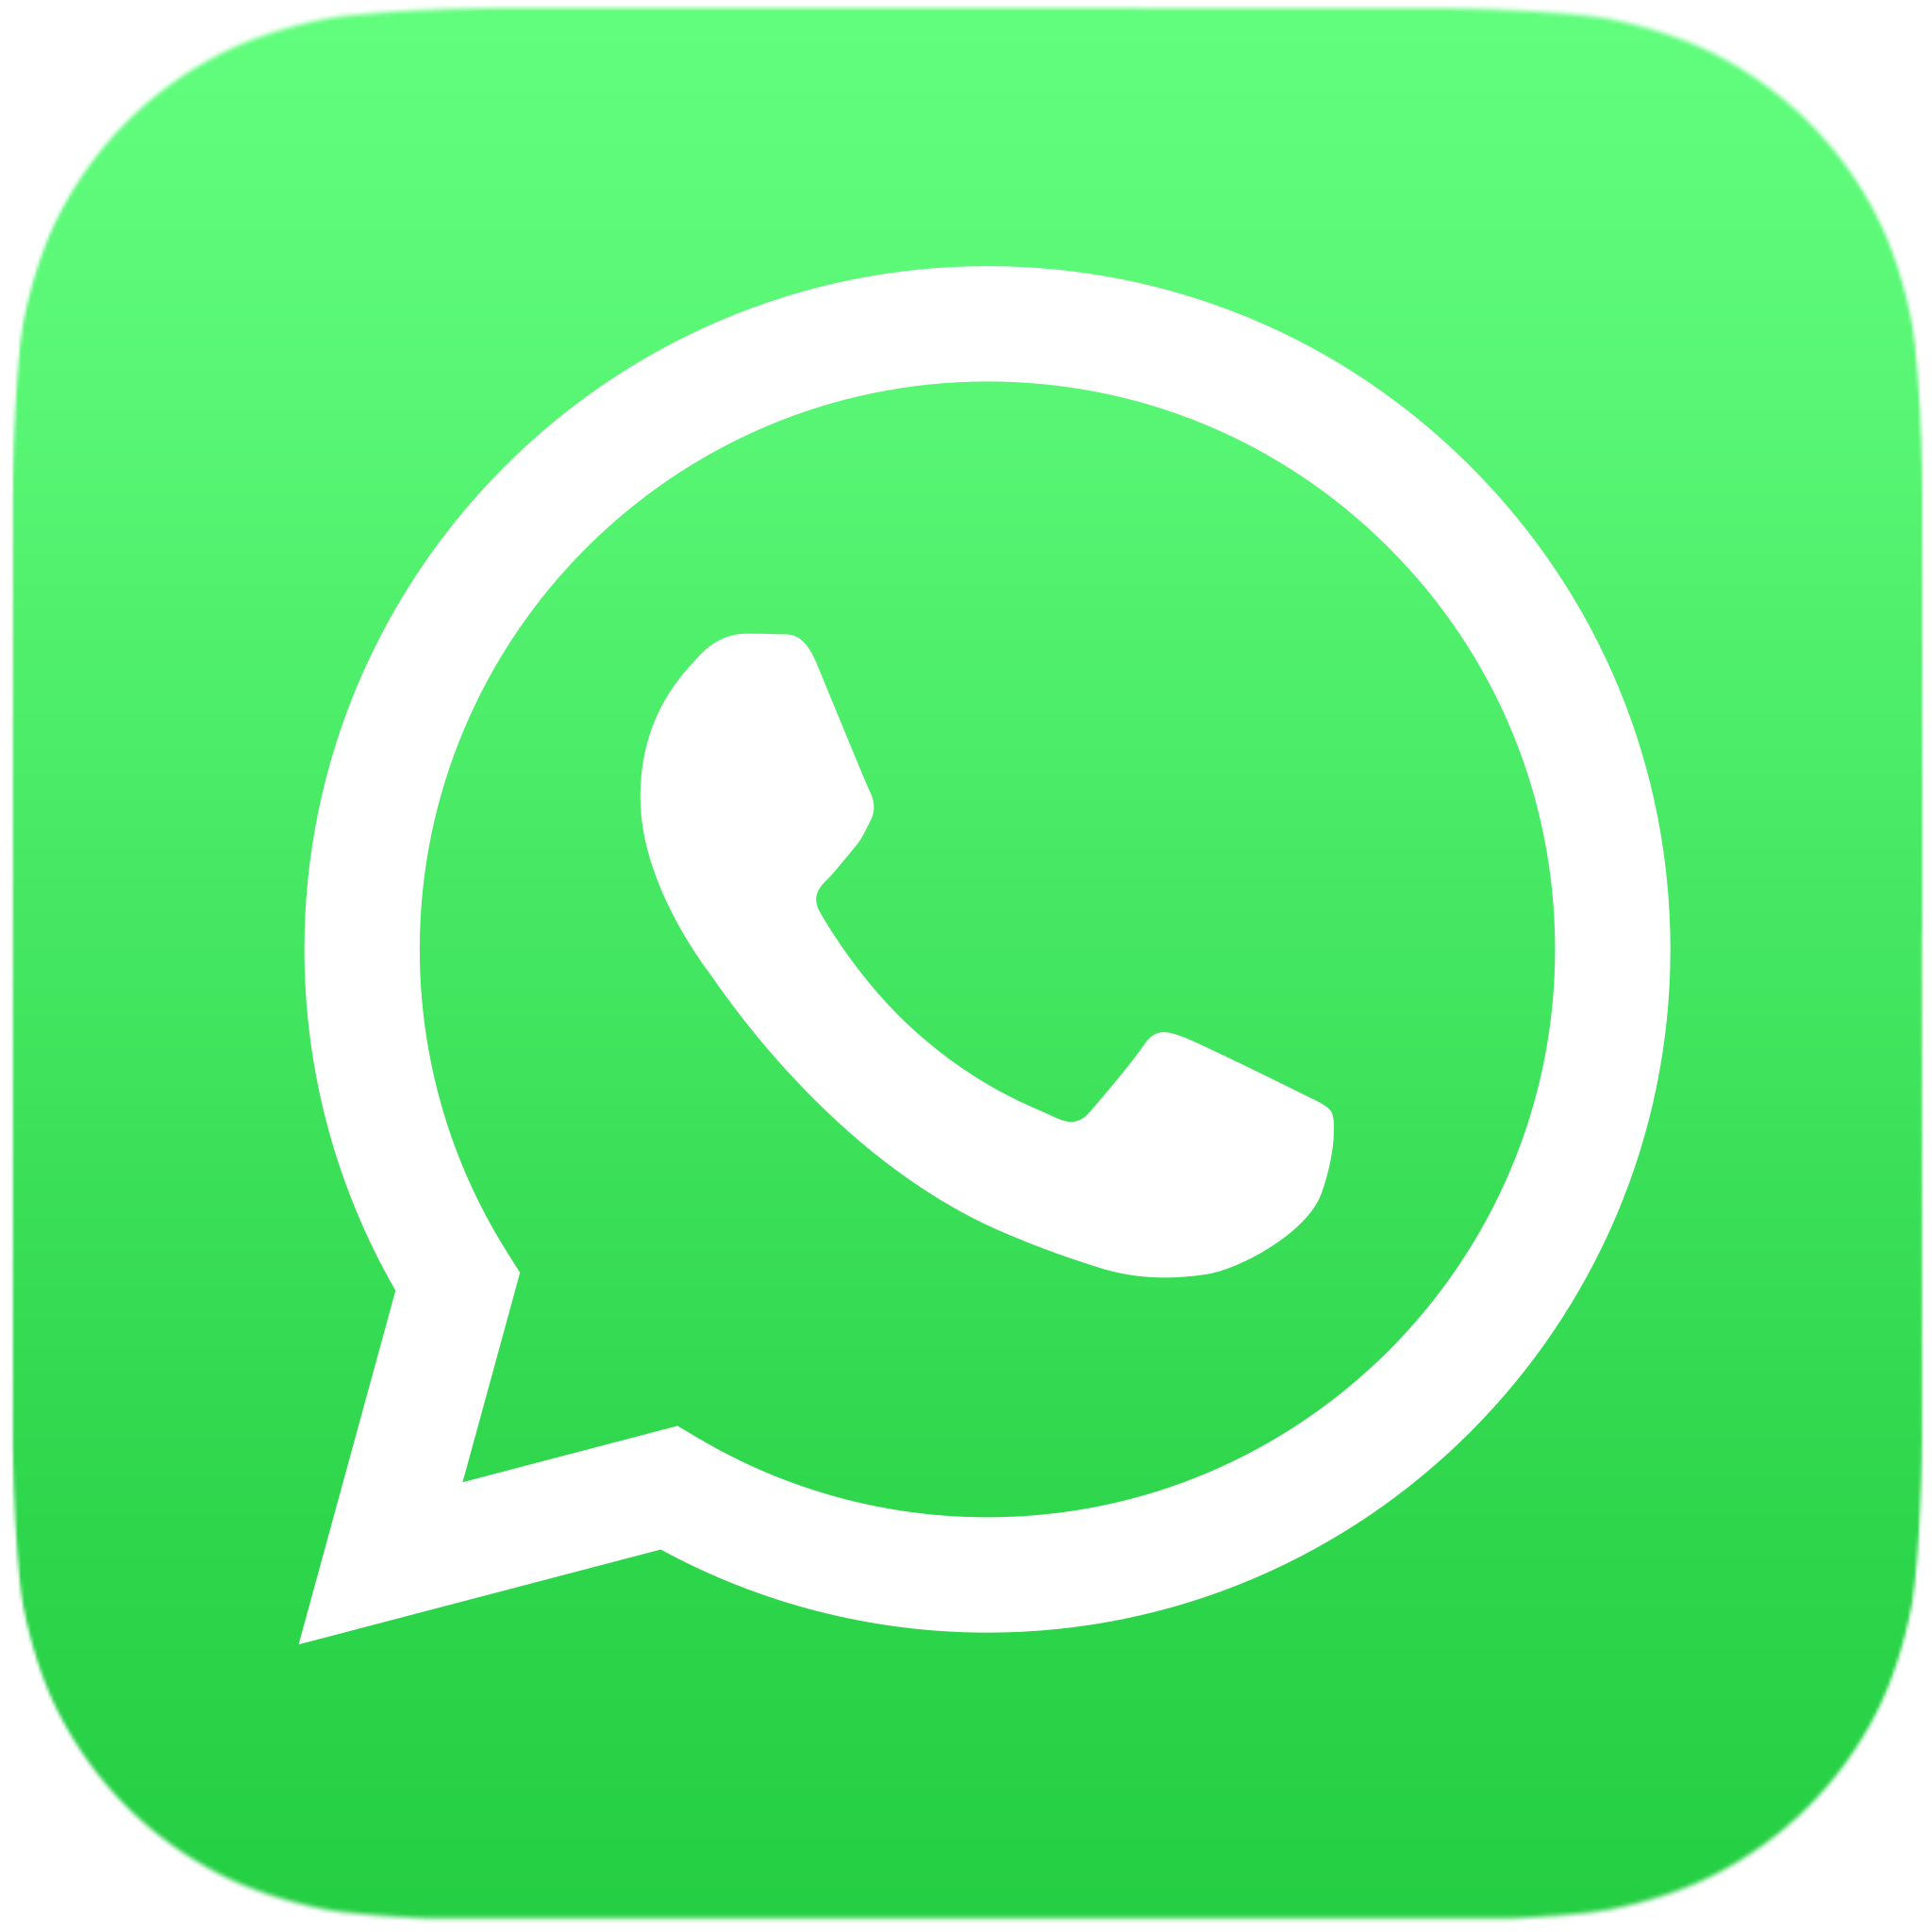 Archivo:WhatsApp logo-color-vertical.svg - Wikipedia, la enciclopedia libre